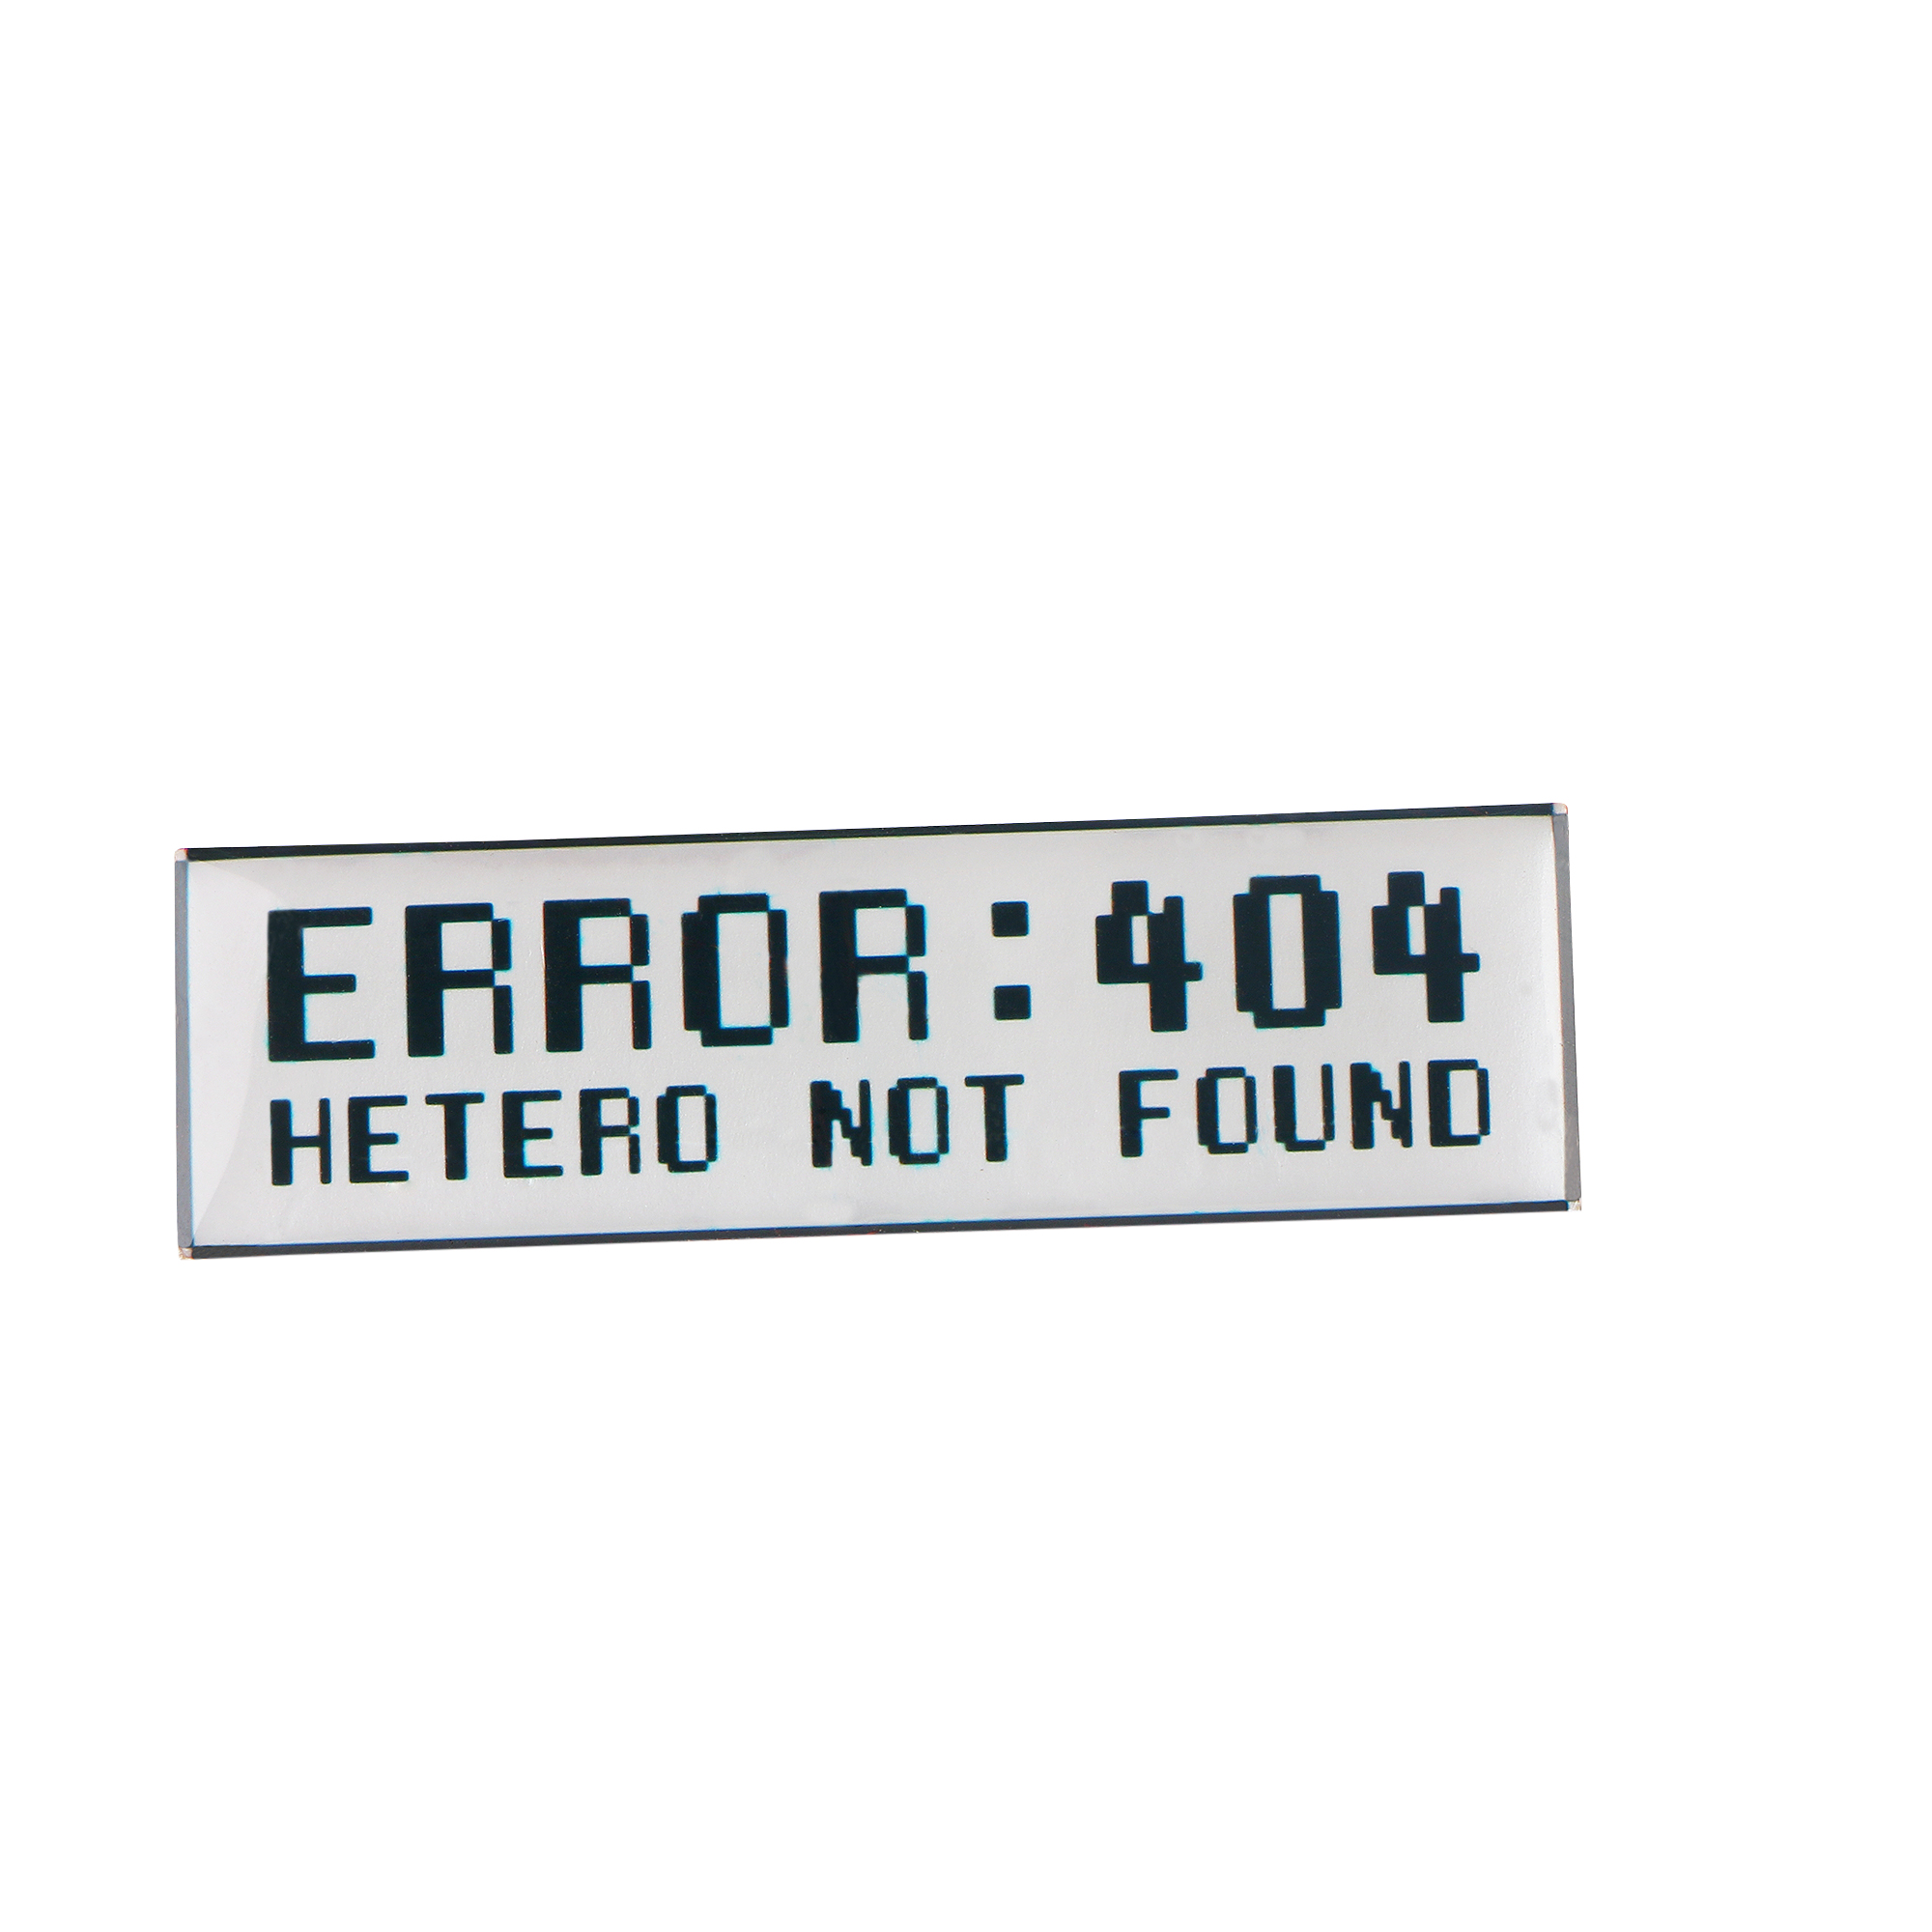 Error 404 - Hetero not found Lapel pin